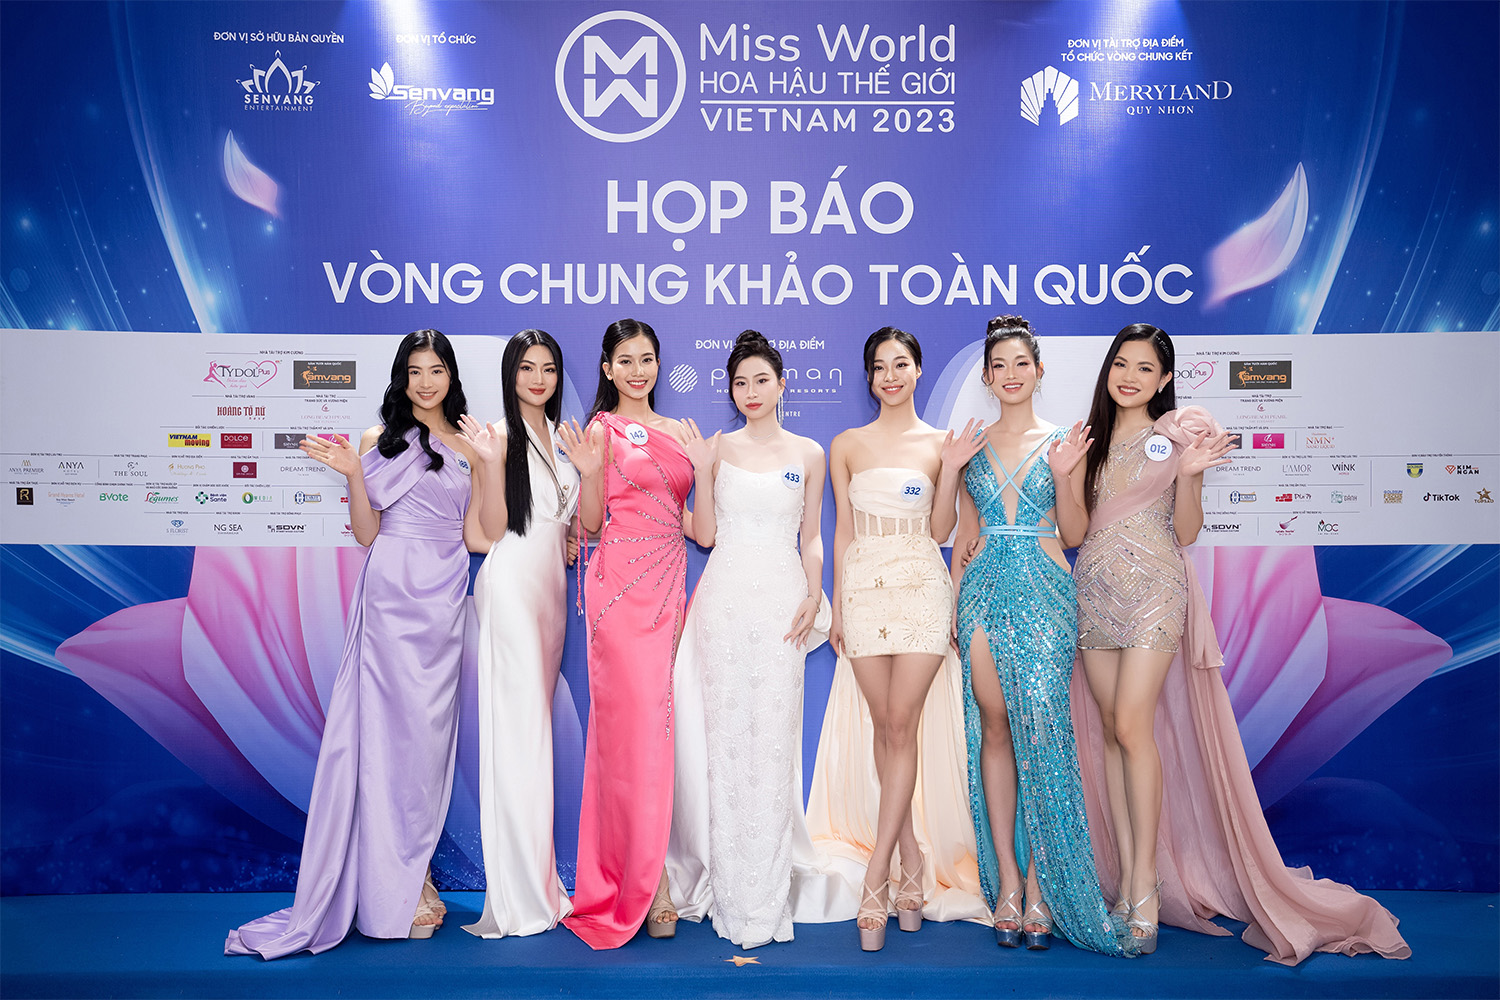 Harper's Bazaar_Họp báo chung khảo Miss World Vietnam 2023_08